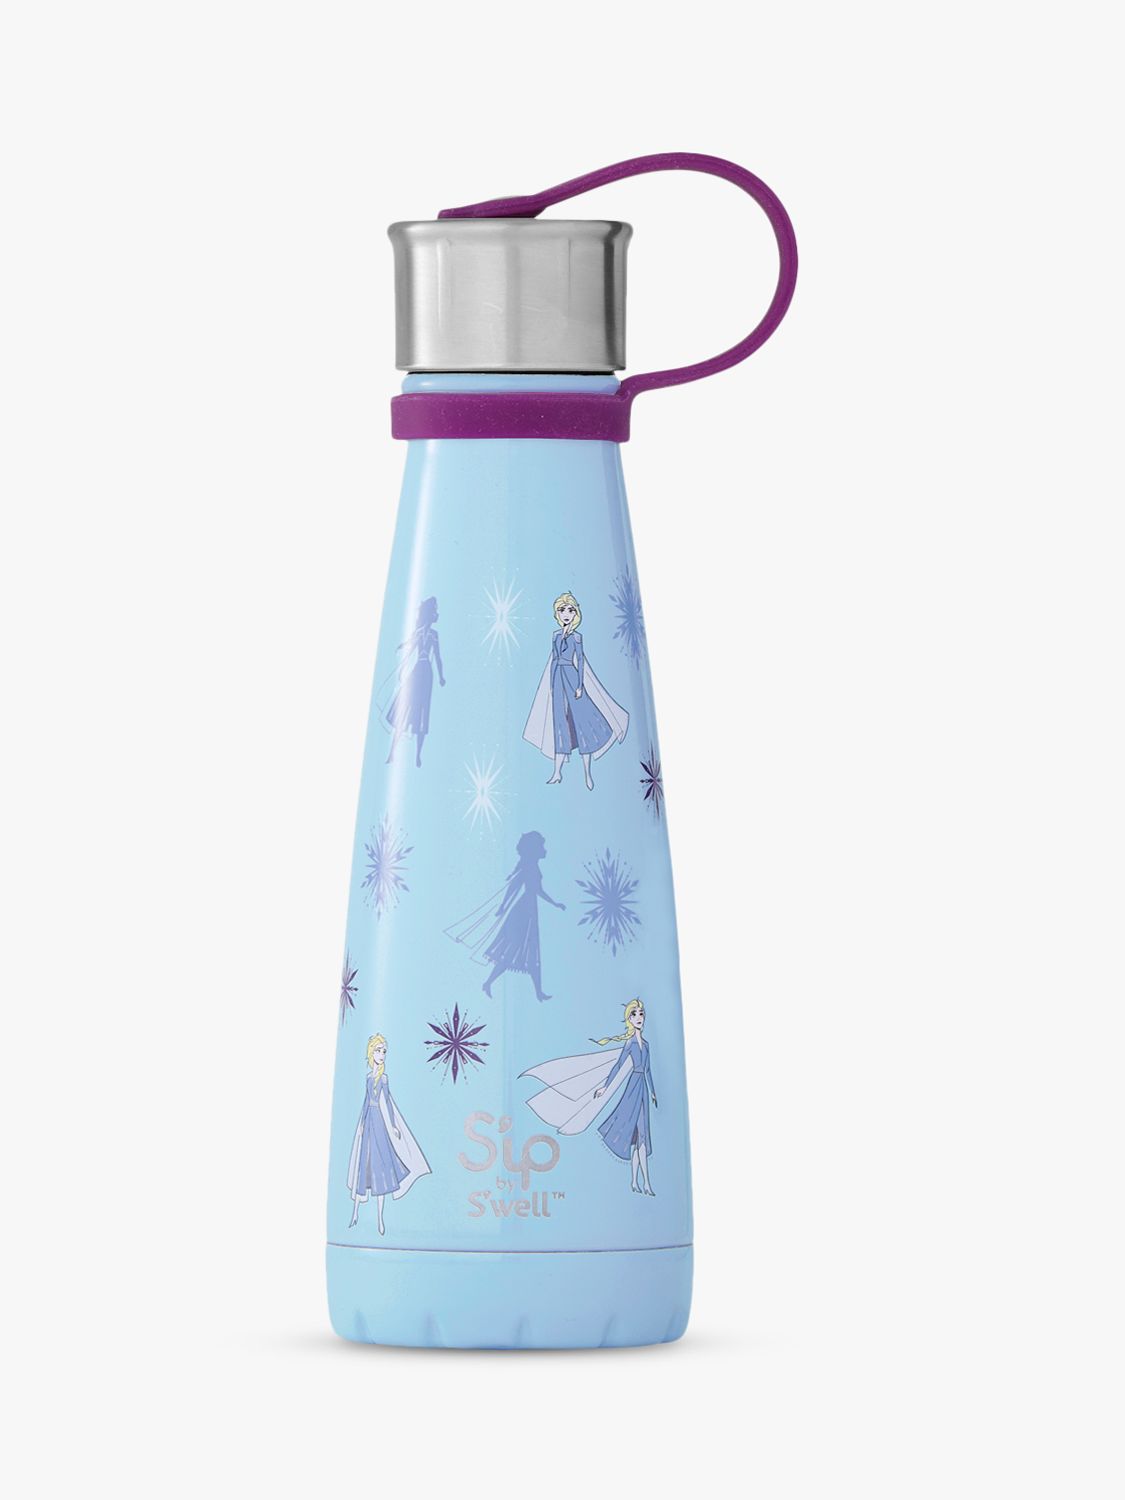 S'ip by S'well Disney Frozen Elsa Vacuum Insulated Drinks Bottle, 295ml, Blue